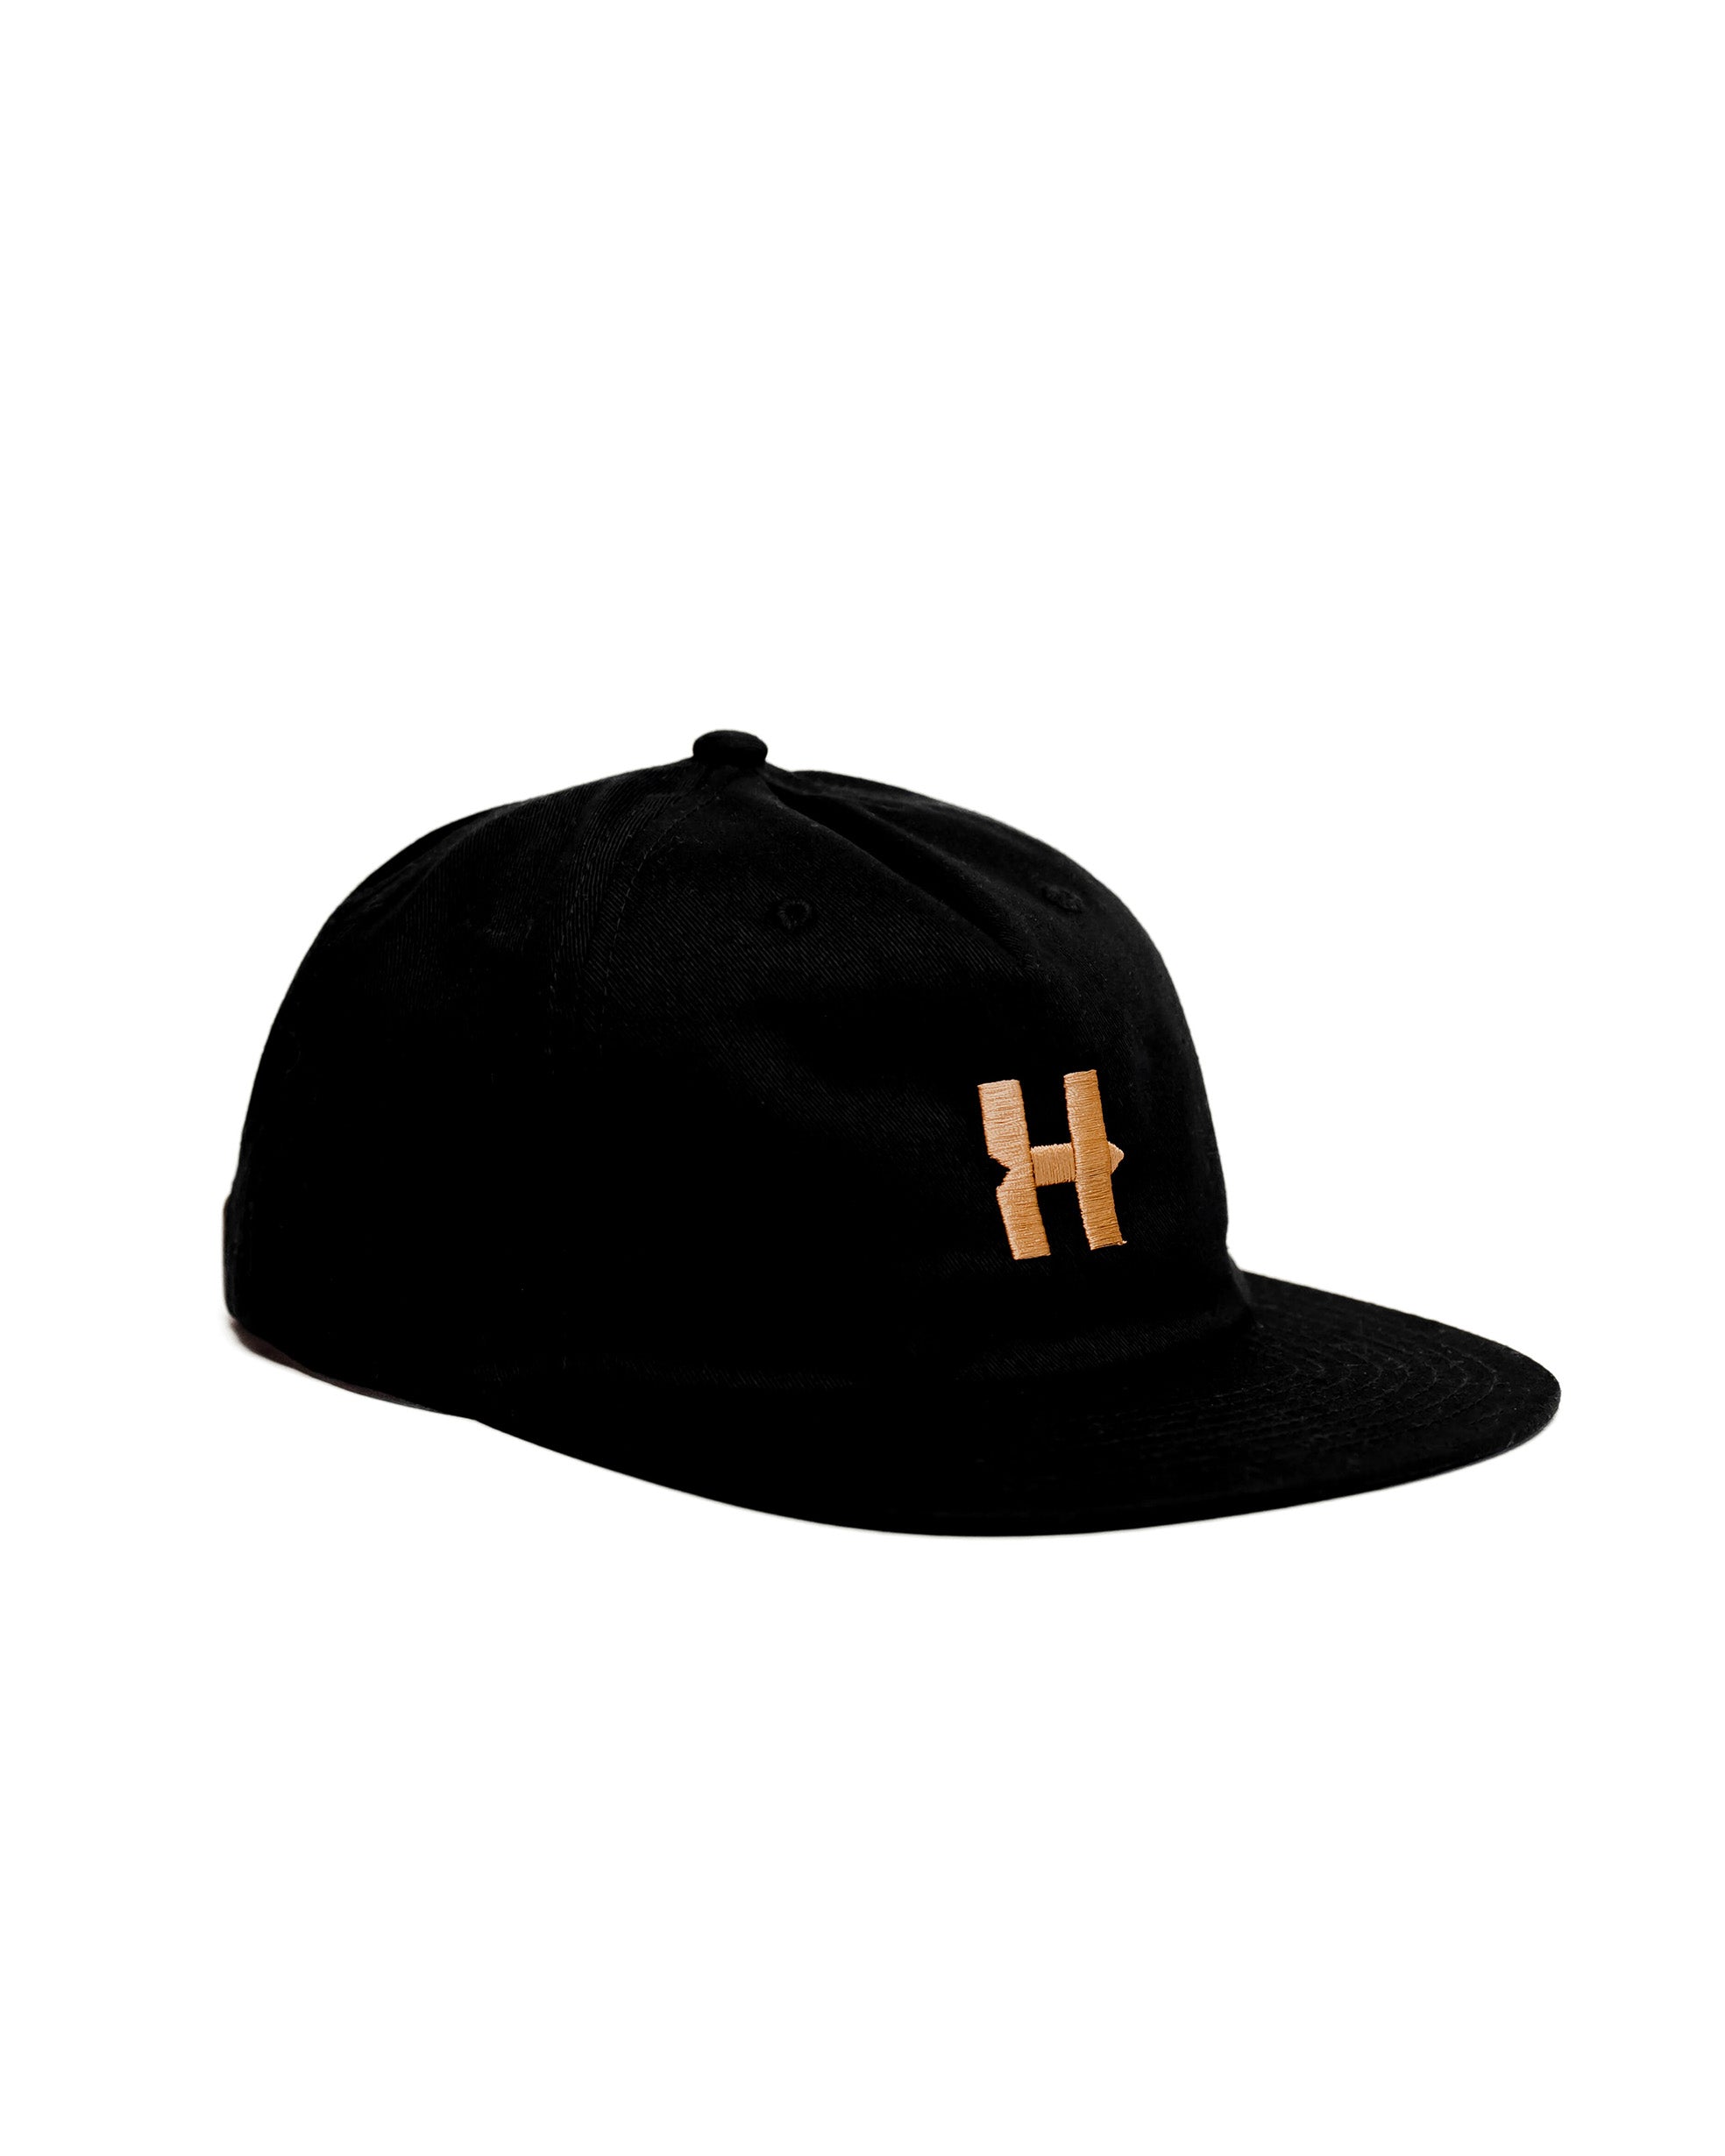 H Team Hat